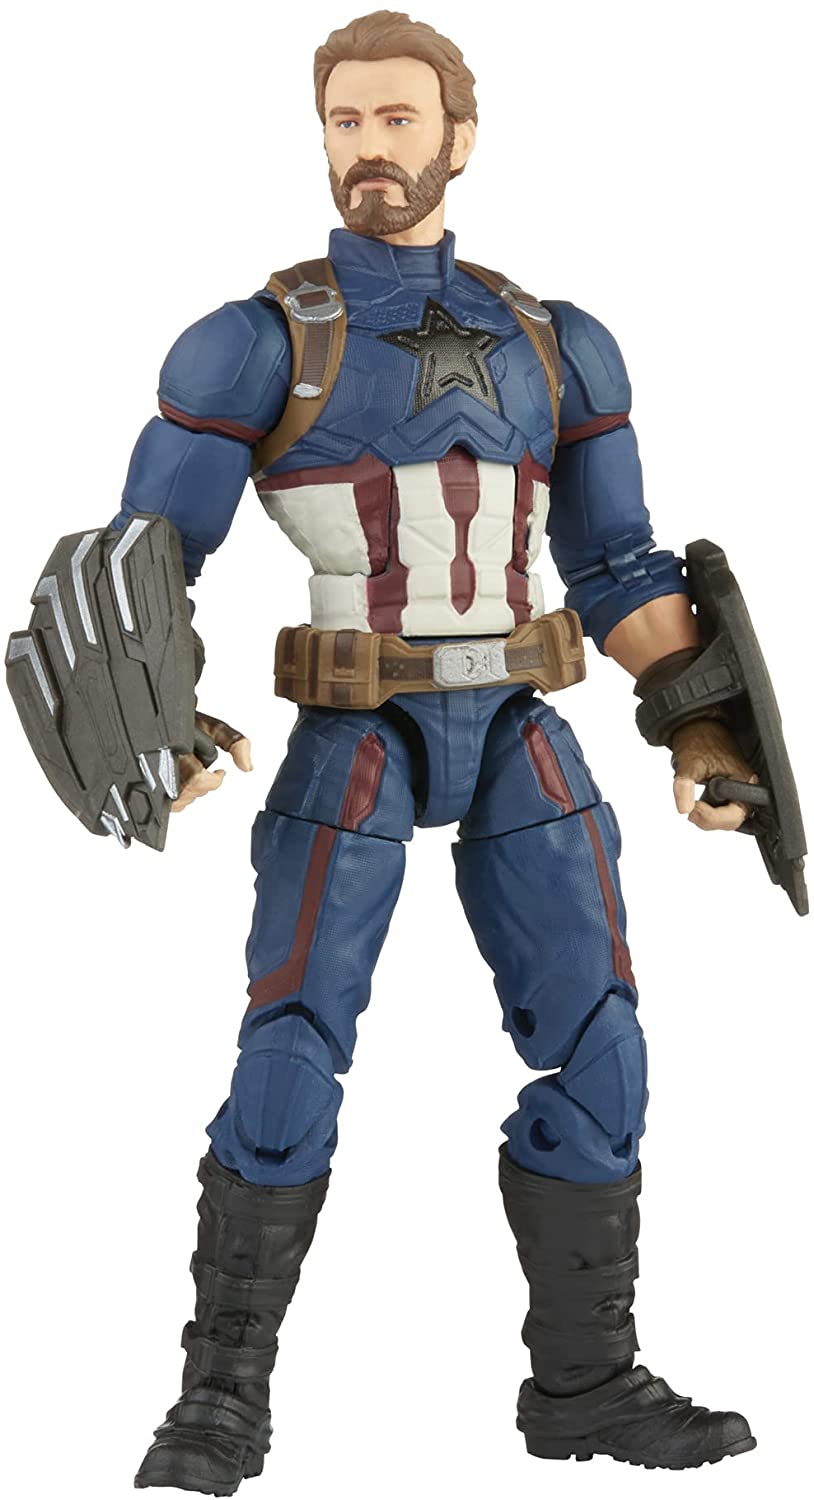 Avengers - Infinity Hasbro Marvel Legends Series, Captain America 15 cm Action Figure, Premium Design, Includes 5 Accessories, Multicolor, F01855L0 Multi-coloured